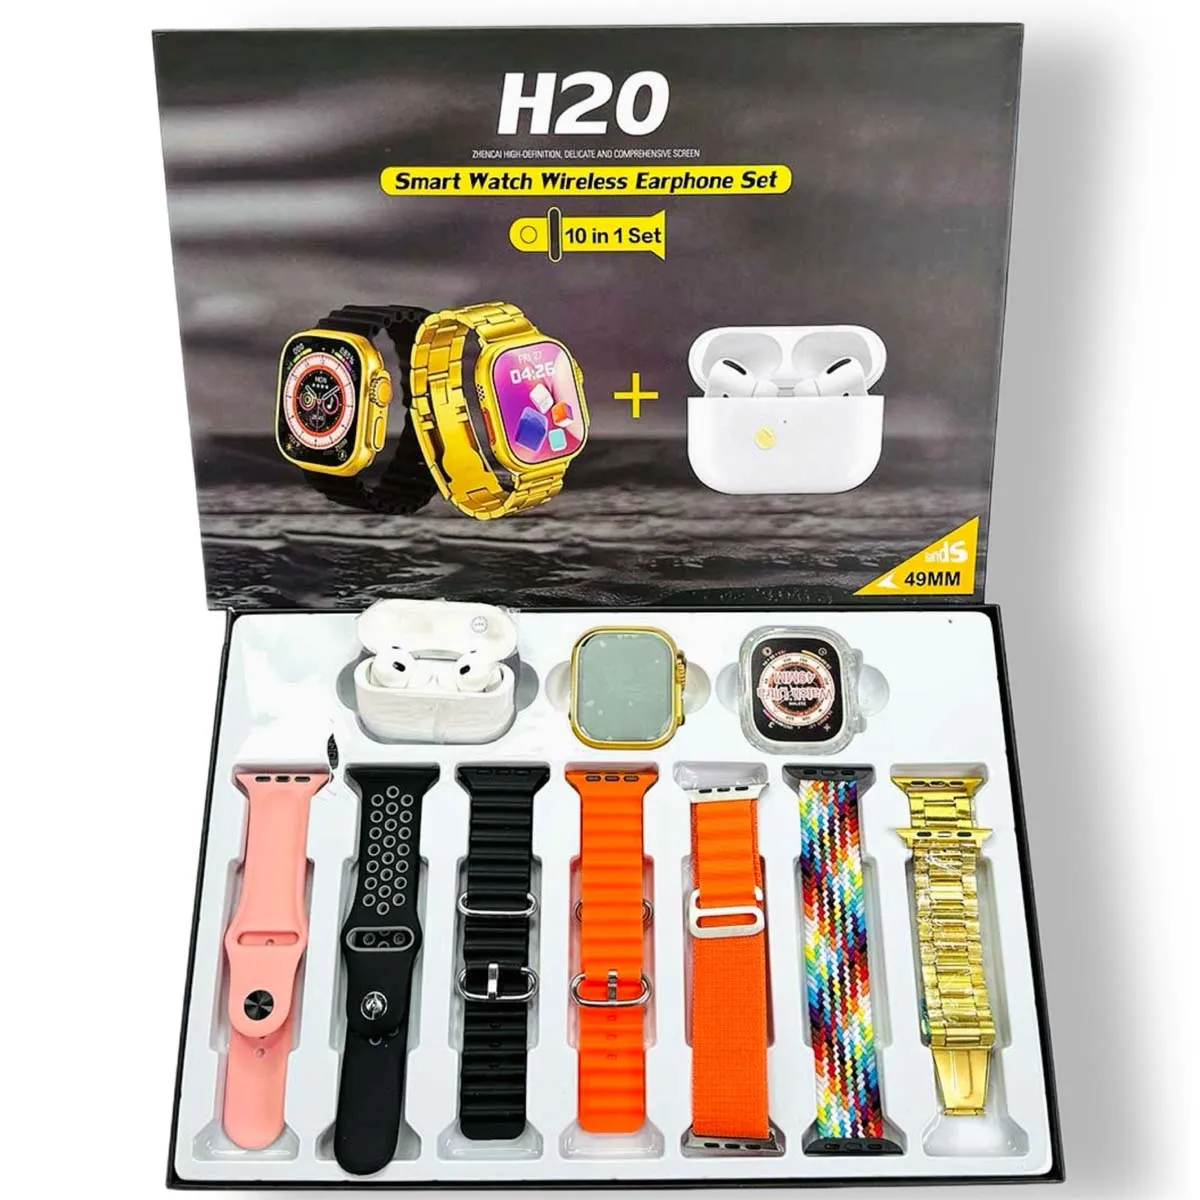 H20 Ultra Smart Watch Price in Pakistan